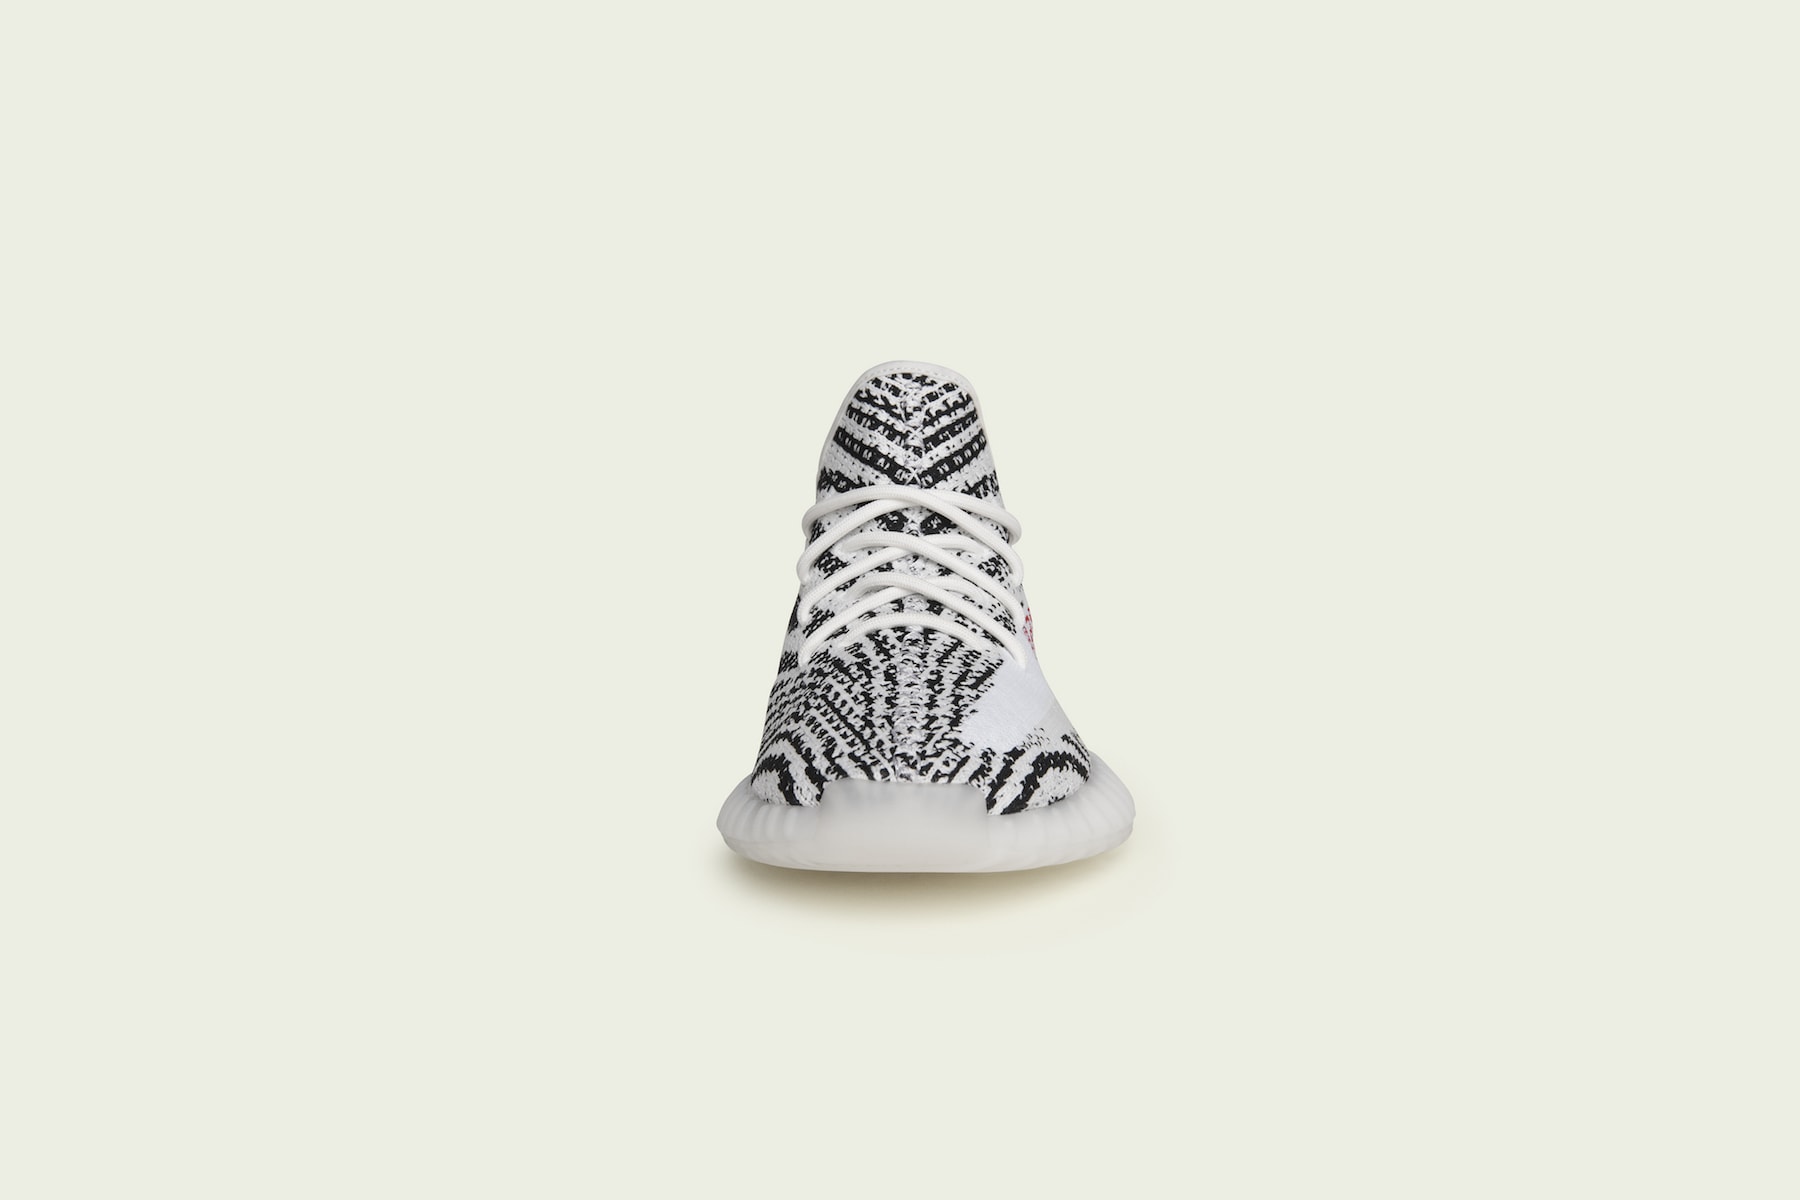 adidas Originals YEEZY BOOST 350 V2 “Zebra” Confirmed